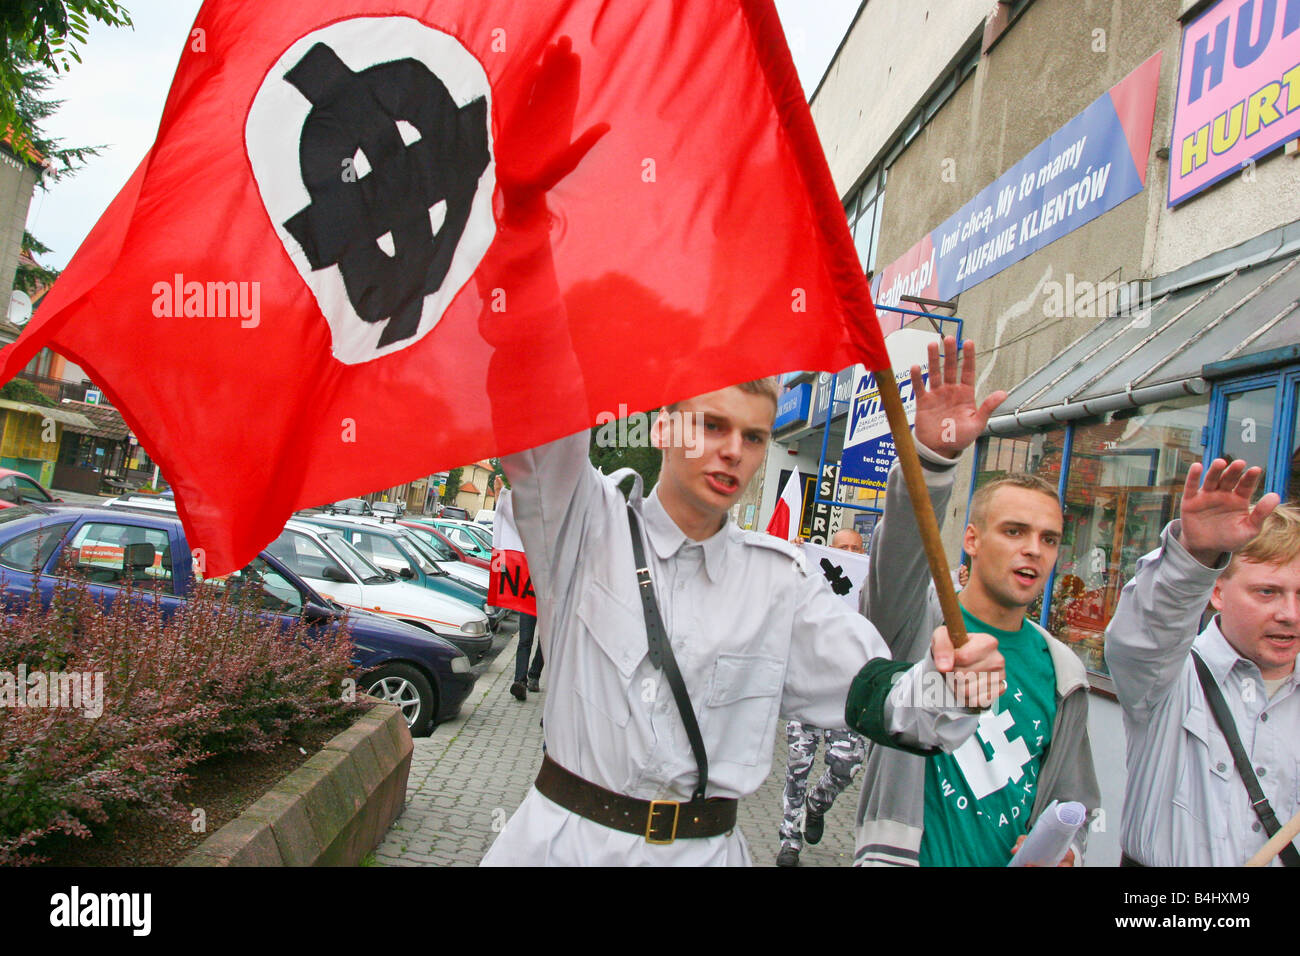 http://c8.alamy.com/comp/B4HXM9/neo-nazi-demonstration-in-myslenice-poland-B4HXM9.jpg